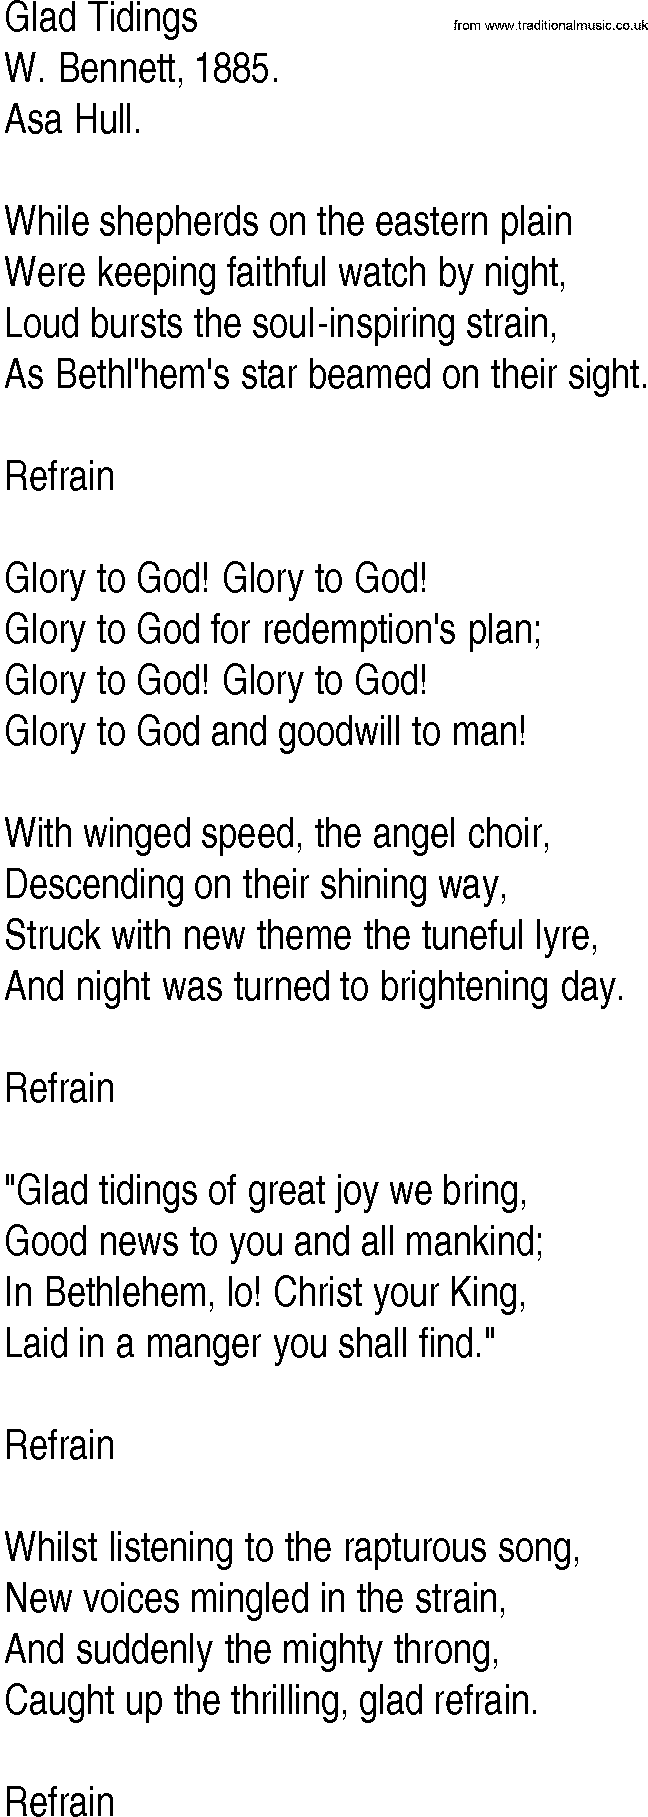 Hymn and Gospel Song: Glad Tidings by W Bennett lyrics